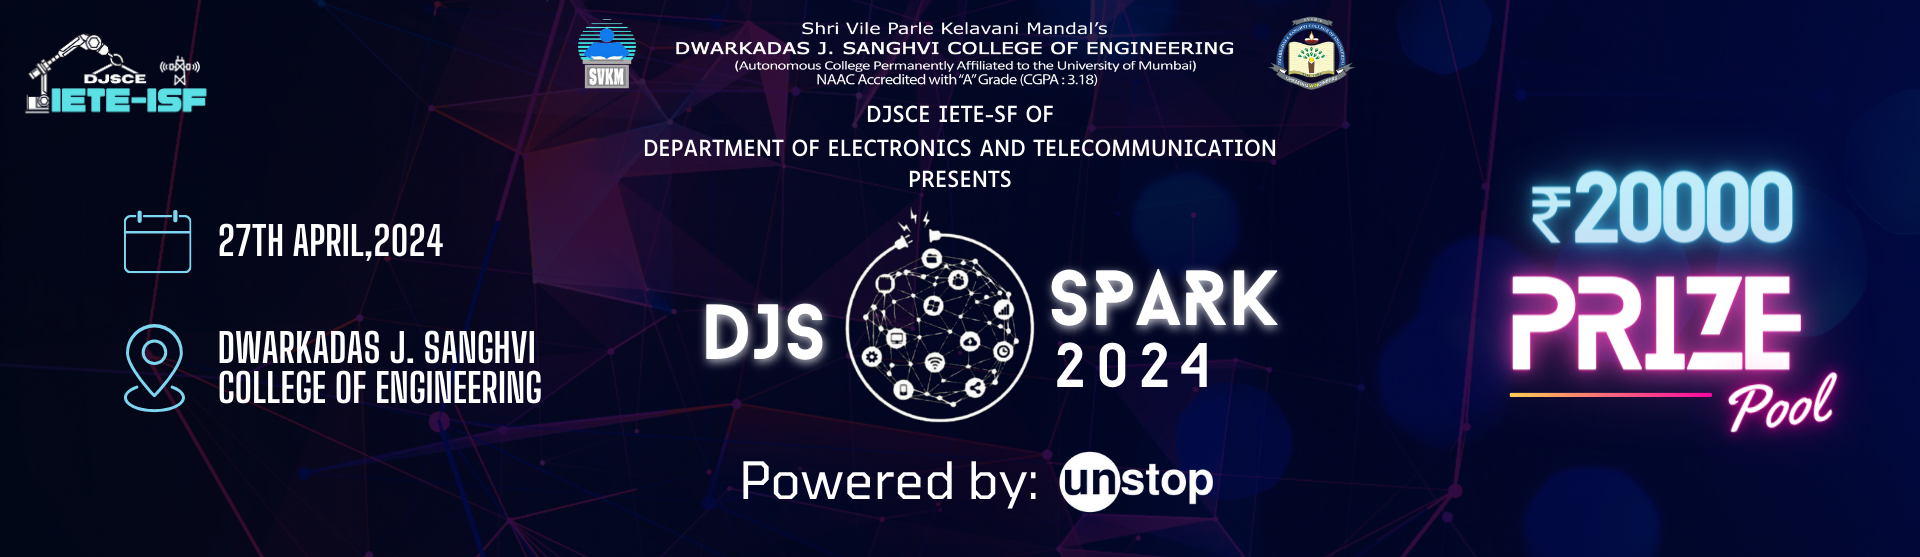 DJS Spark 2024